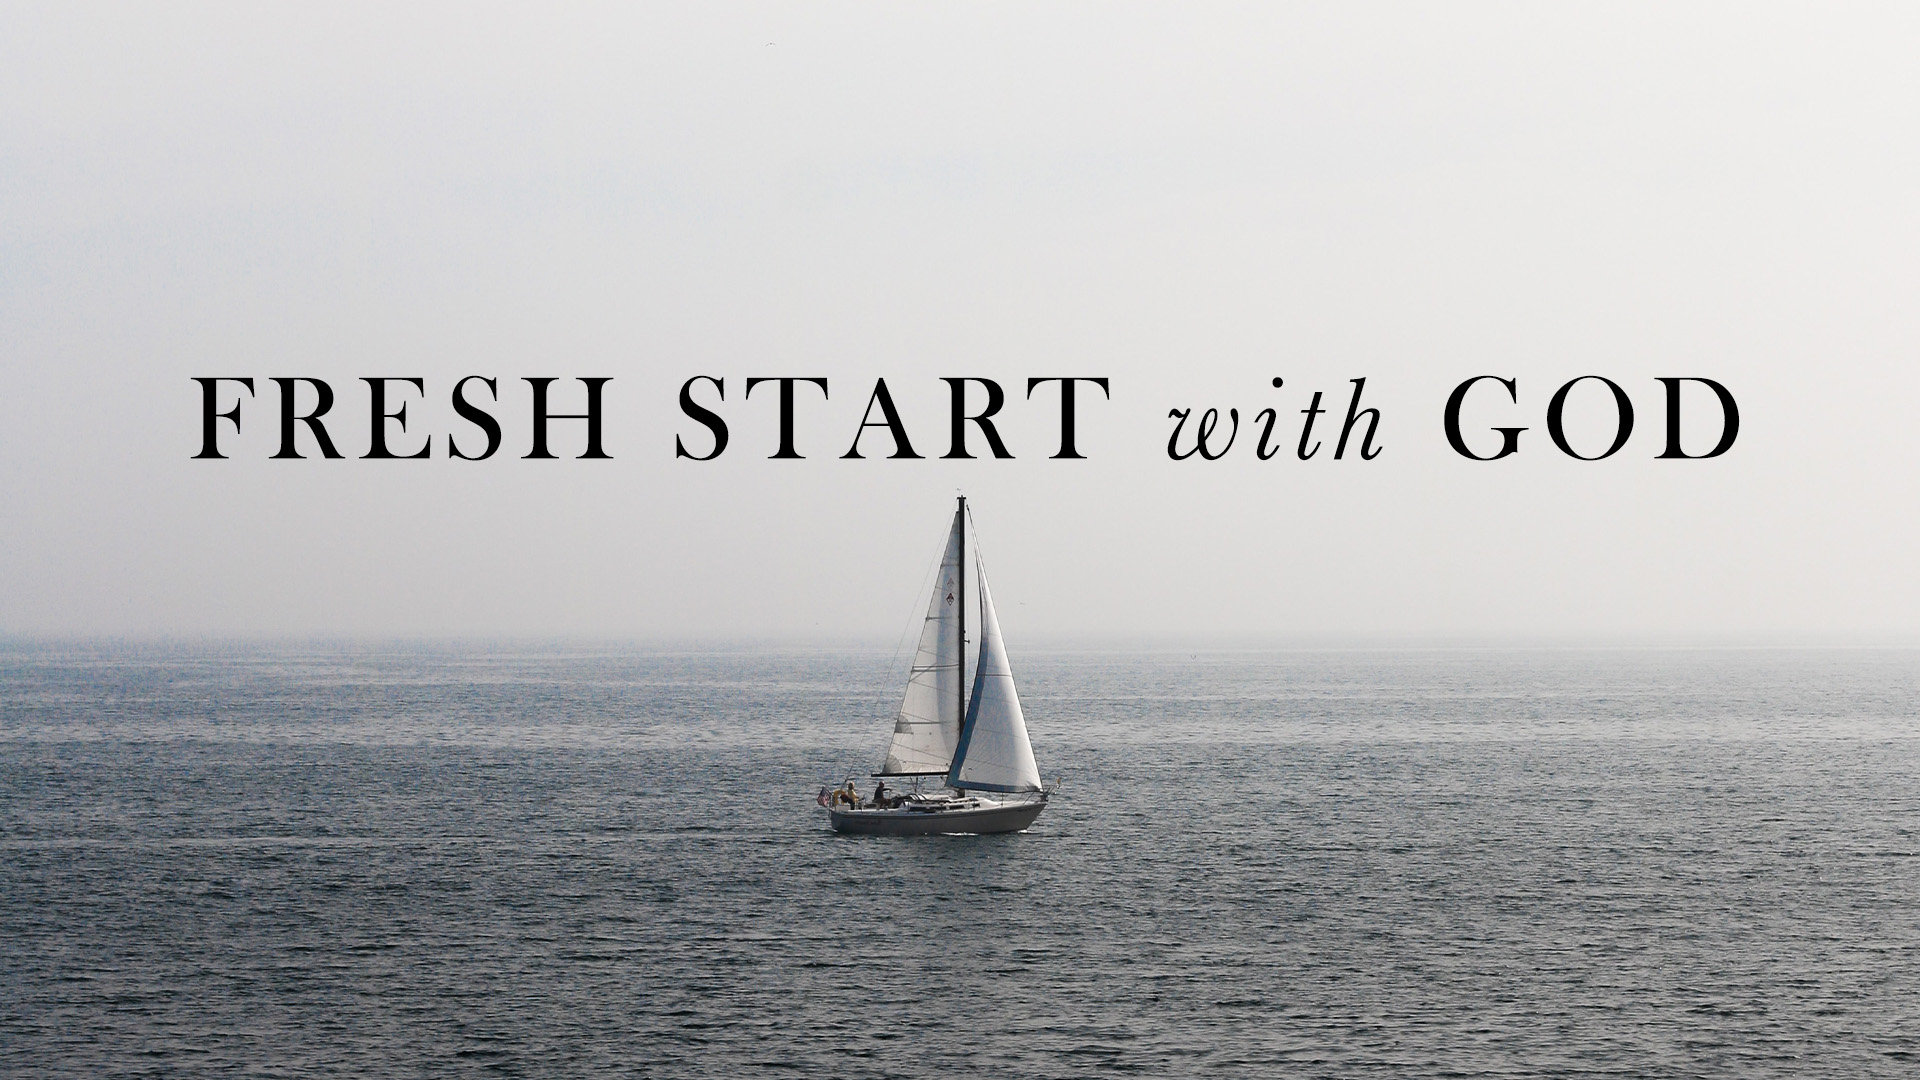 Fresh Start with God

Sunday | 9:00am
April 30
